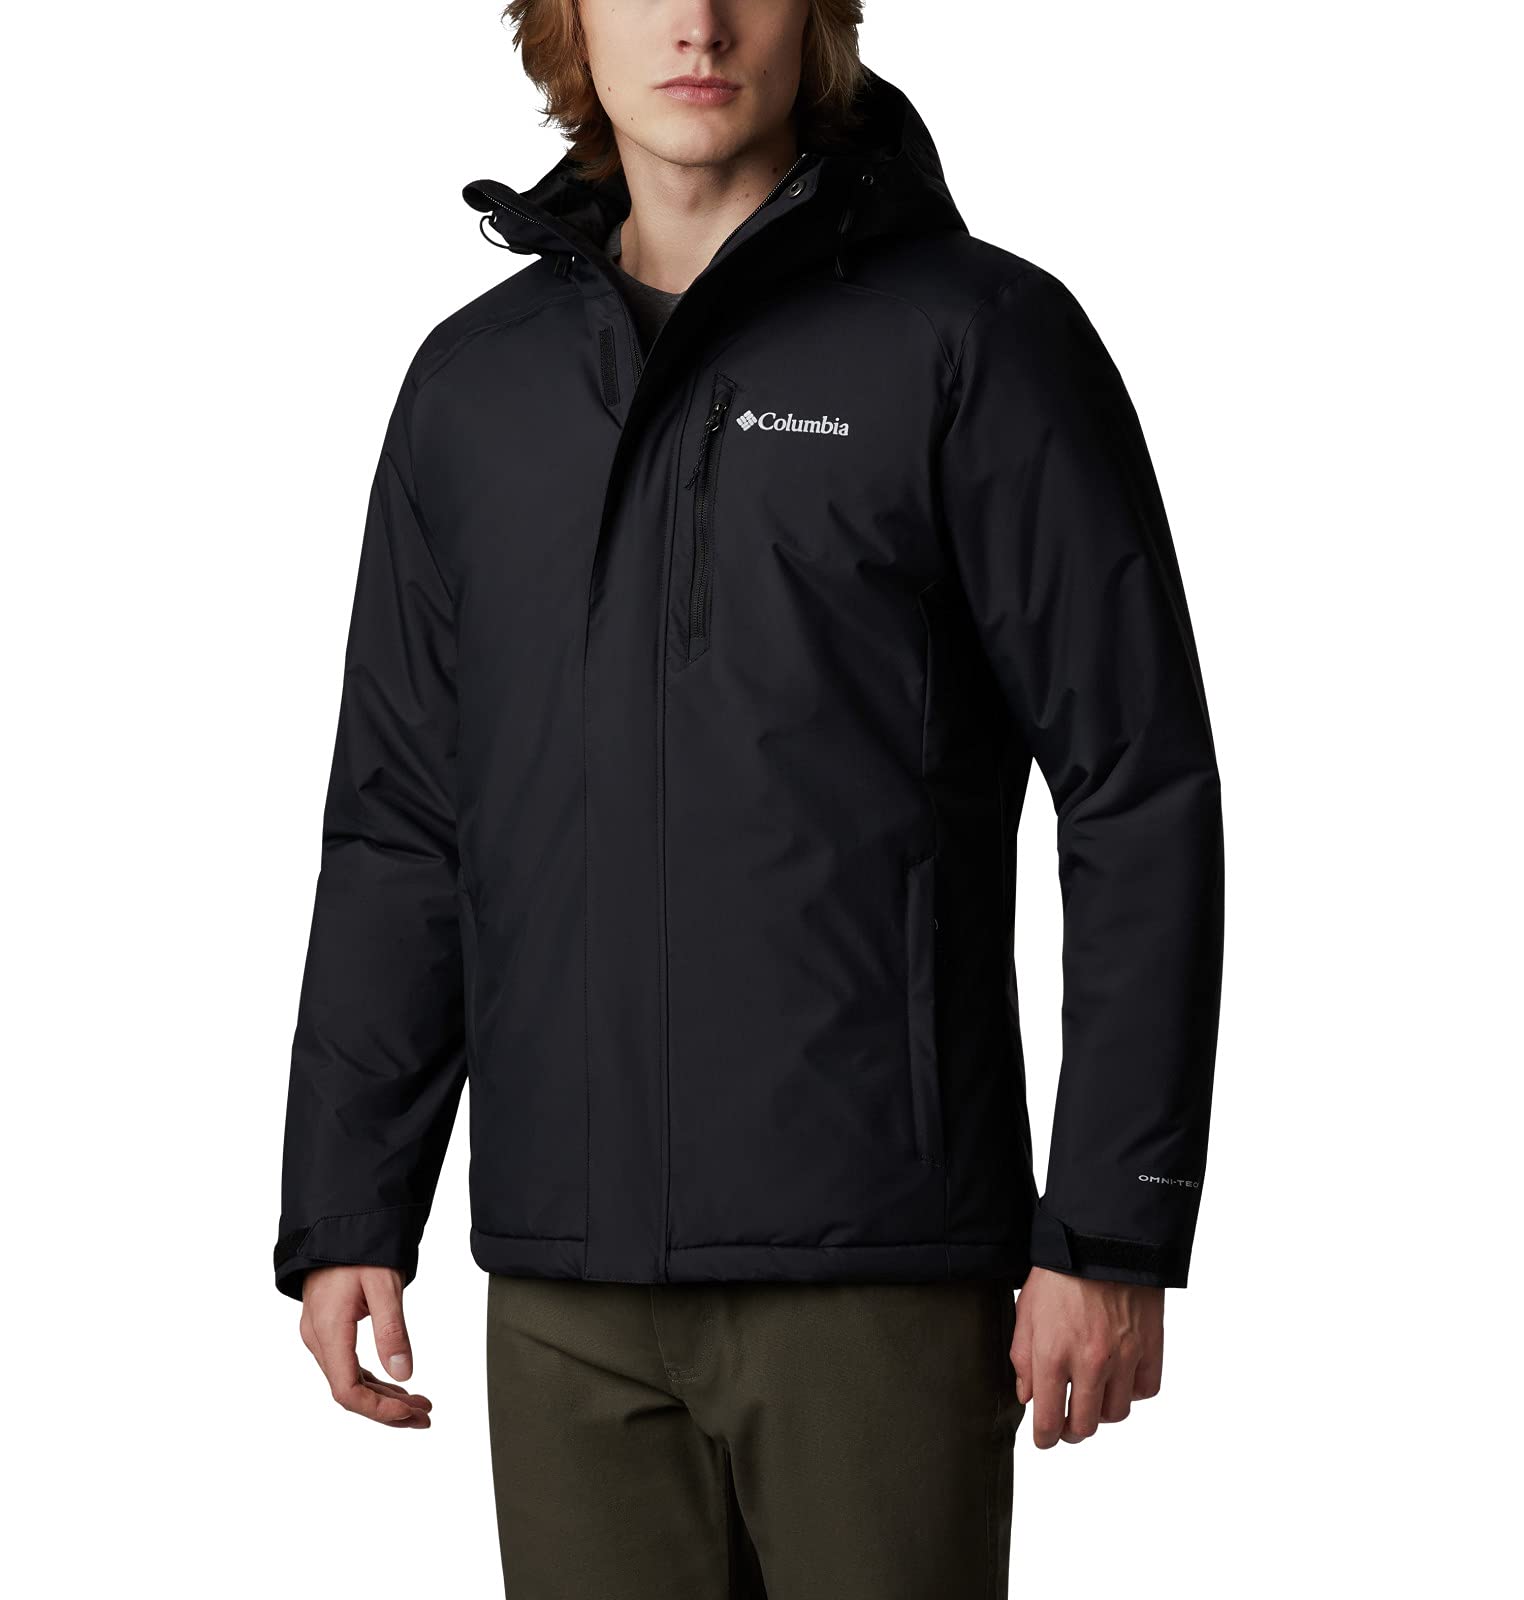 Columbia Men's Tipton Peak Insulated Jacket